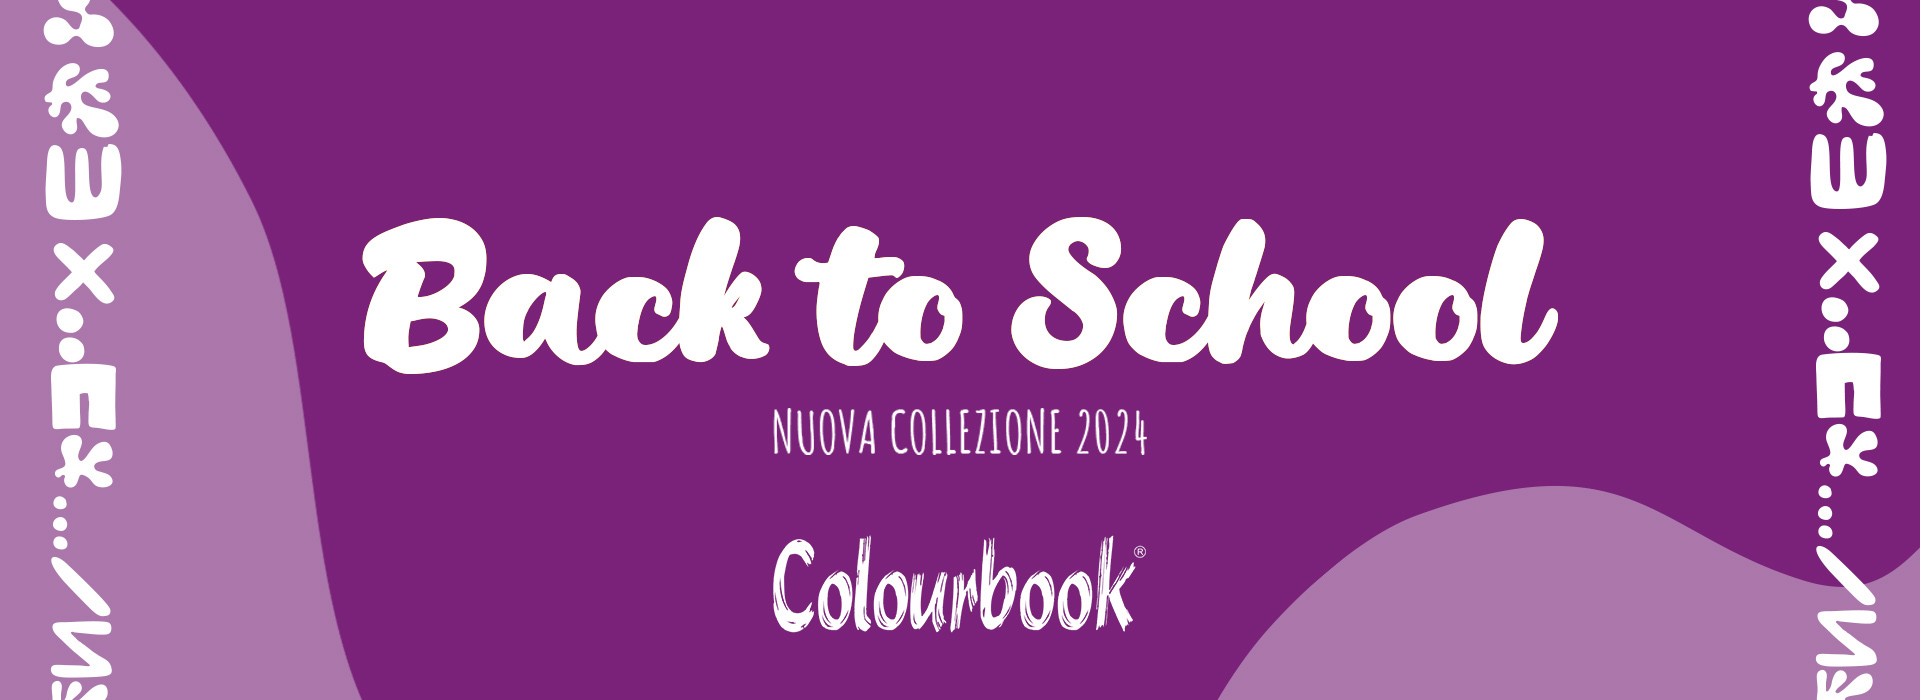 colourbook-back-to-school